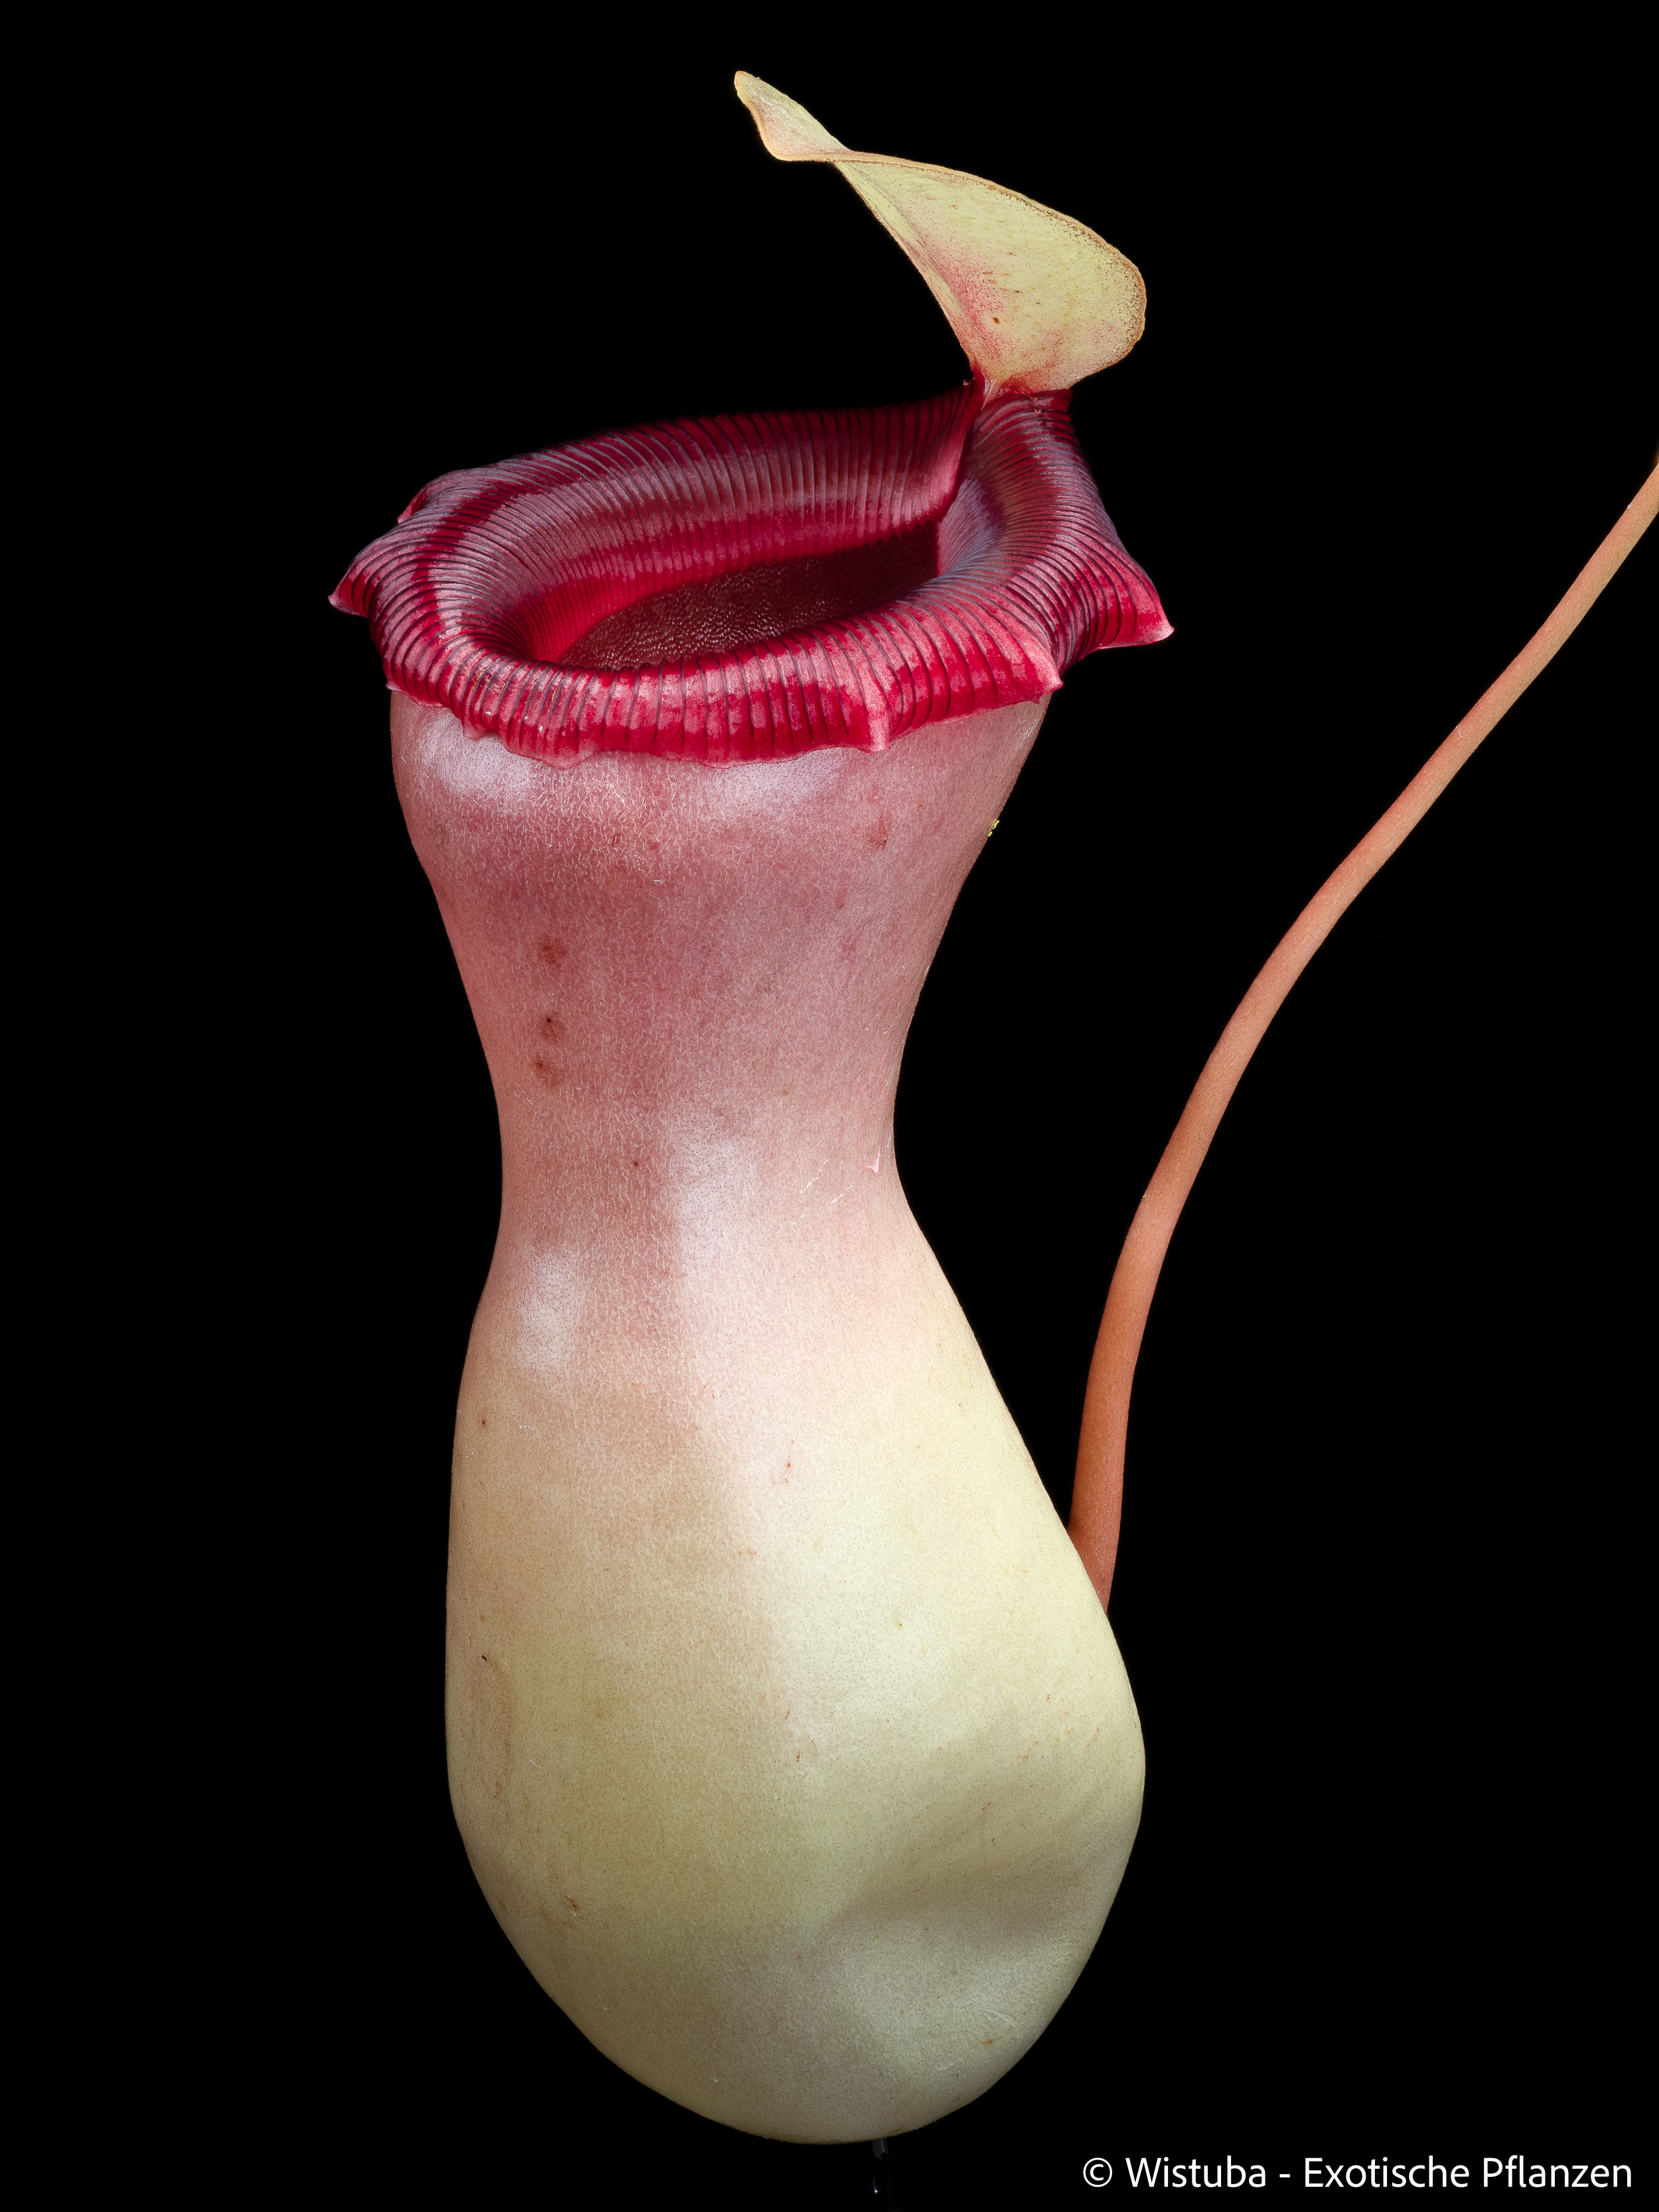 Nepenthes ventricosa "Porcelain" / "Alba"